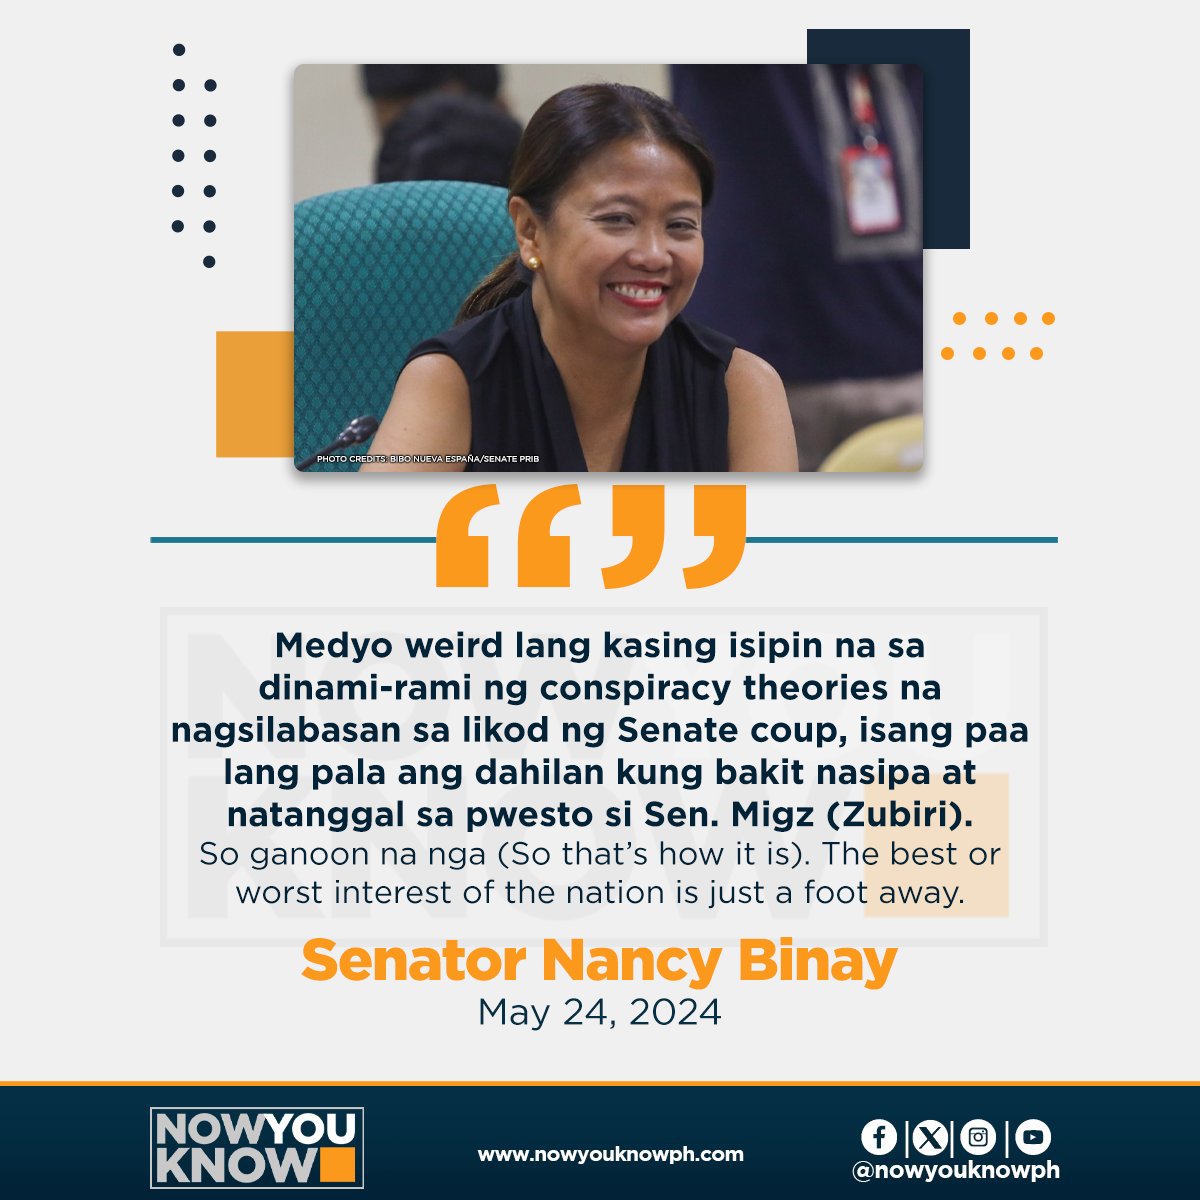 Senator Nancy Binay has poked fun at claims that the issue of Senator Ramon “Bong” Revilla Jr.’s injured foot led to former Senate President Juan Miguel Zubiri’s ouster. READ: tinyurl.com/yc7rr2hw 📰 Inquirer.net